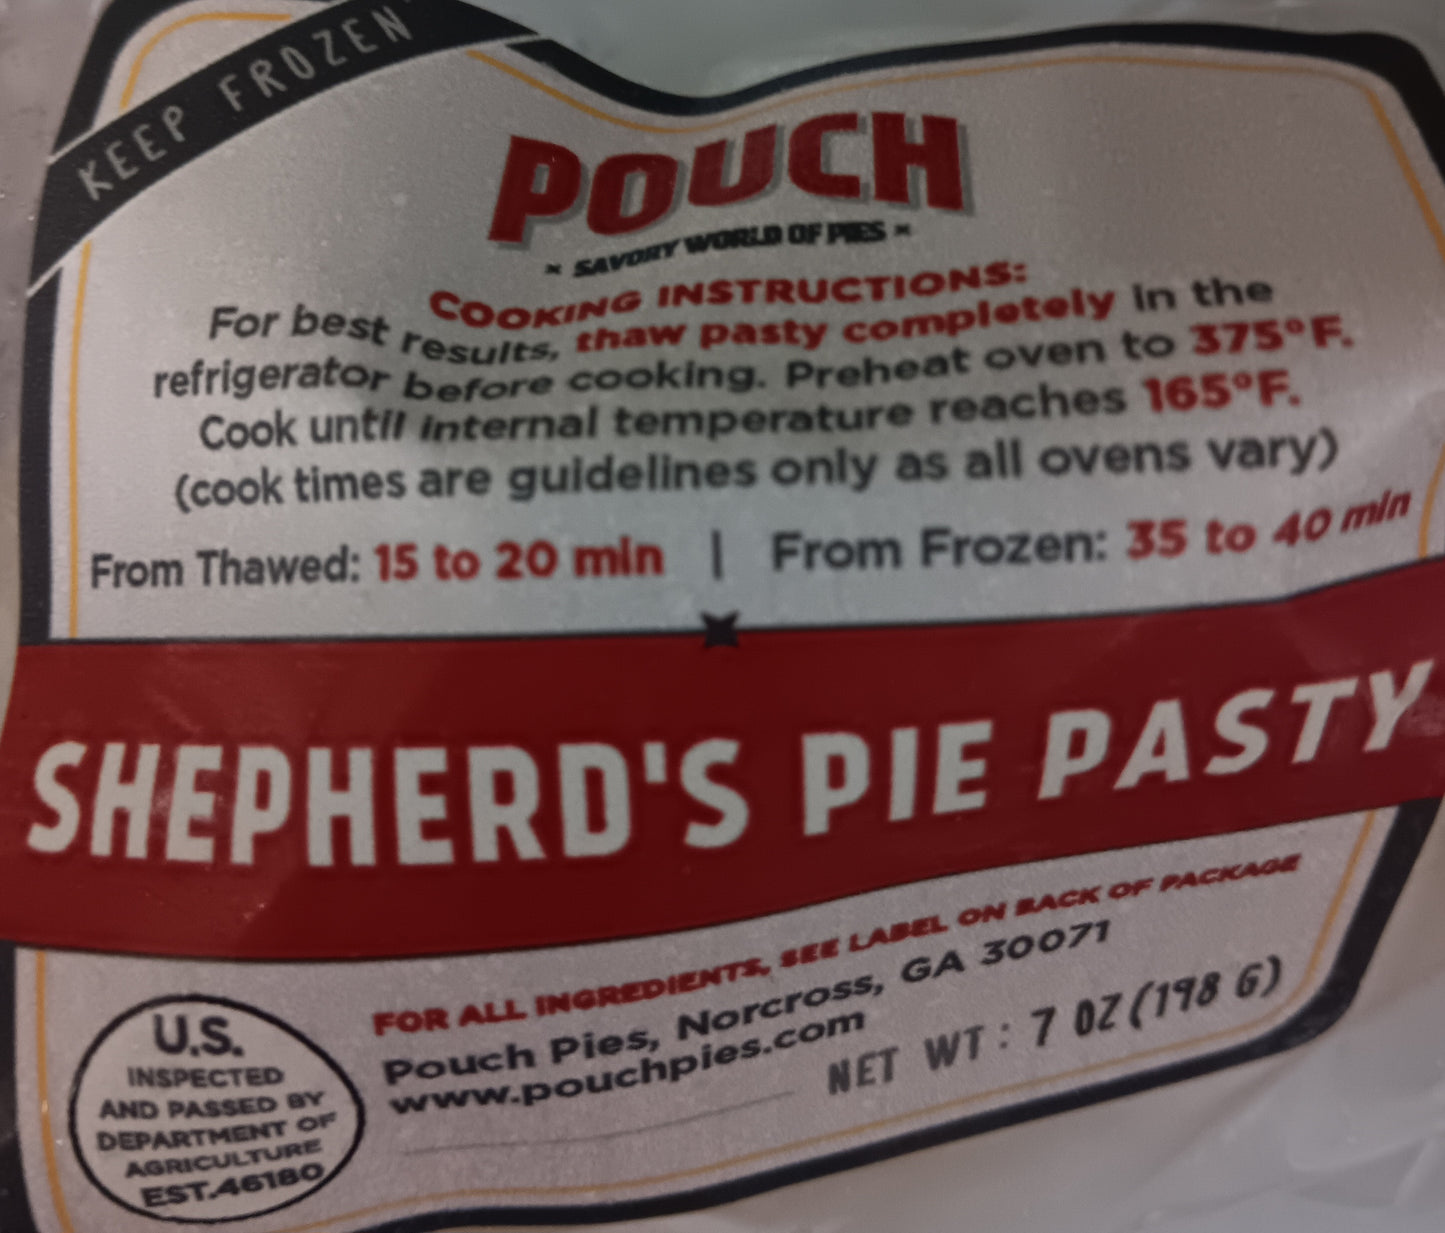 Pouch Pies: Shepherd's Pie Pasty